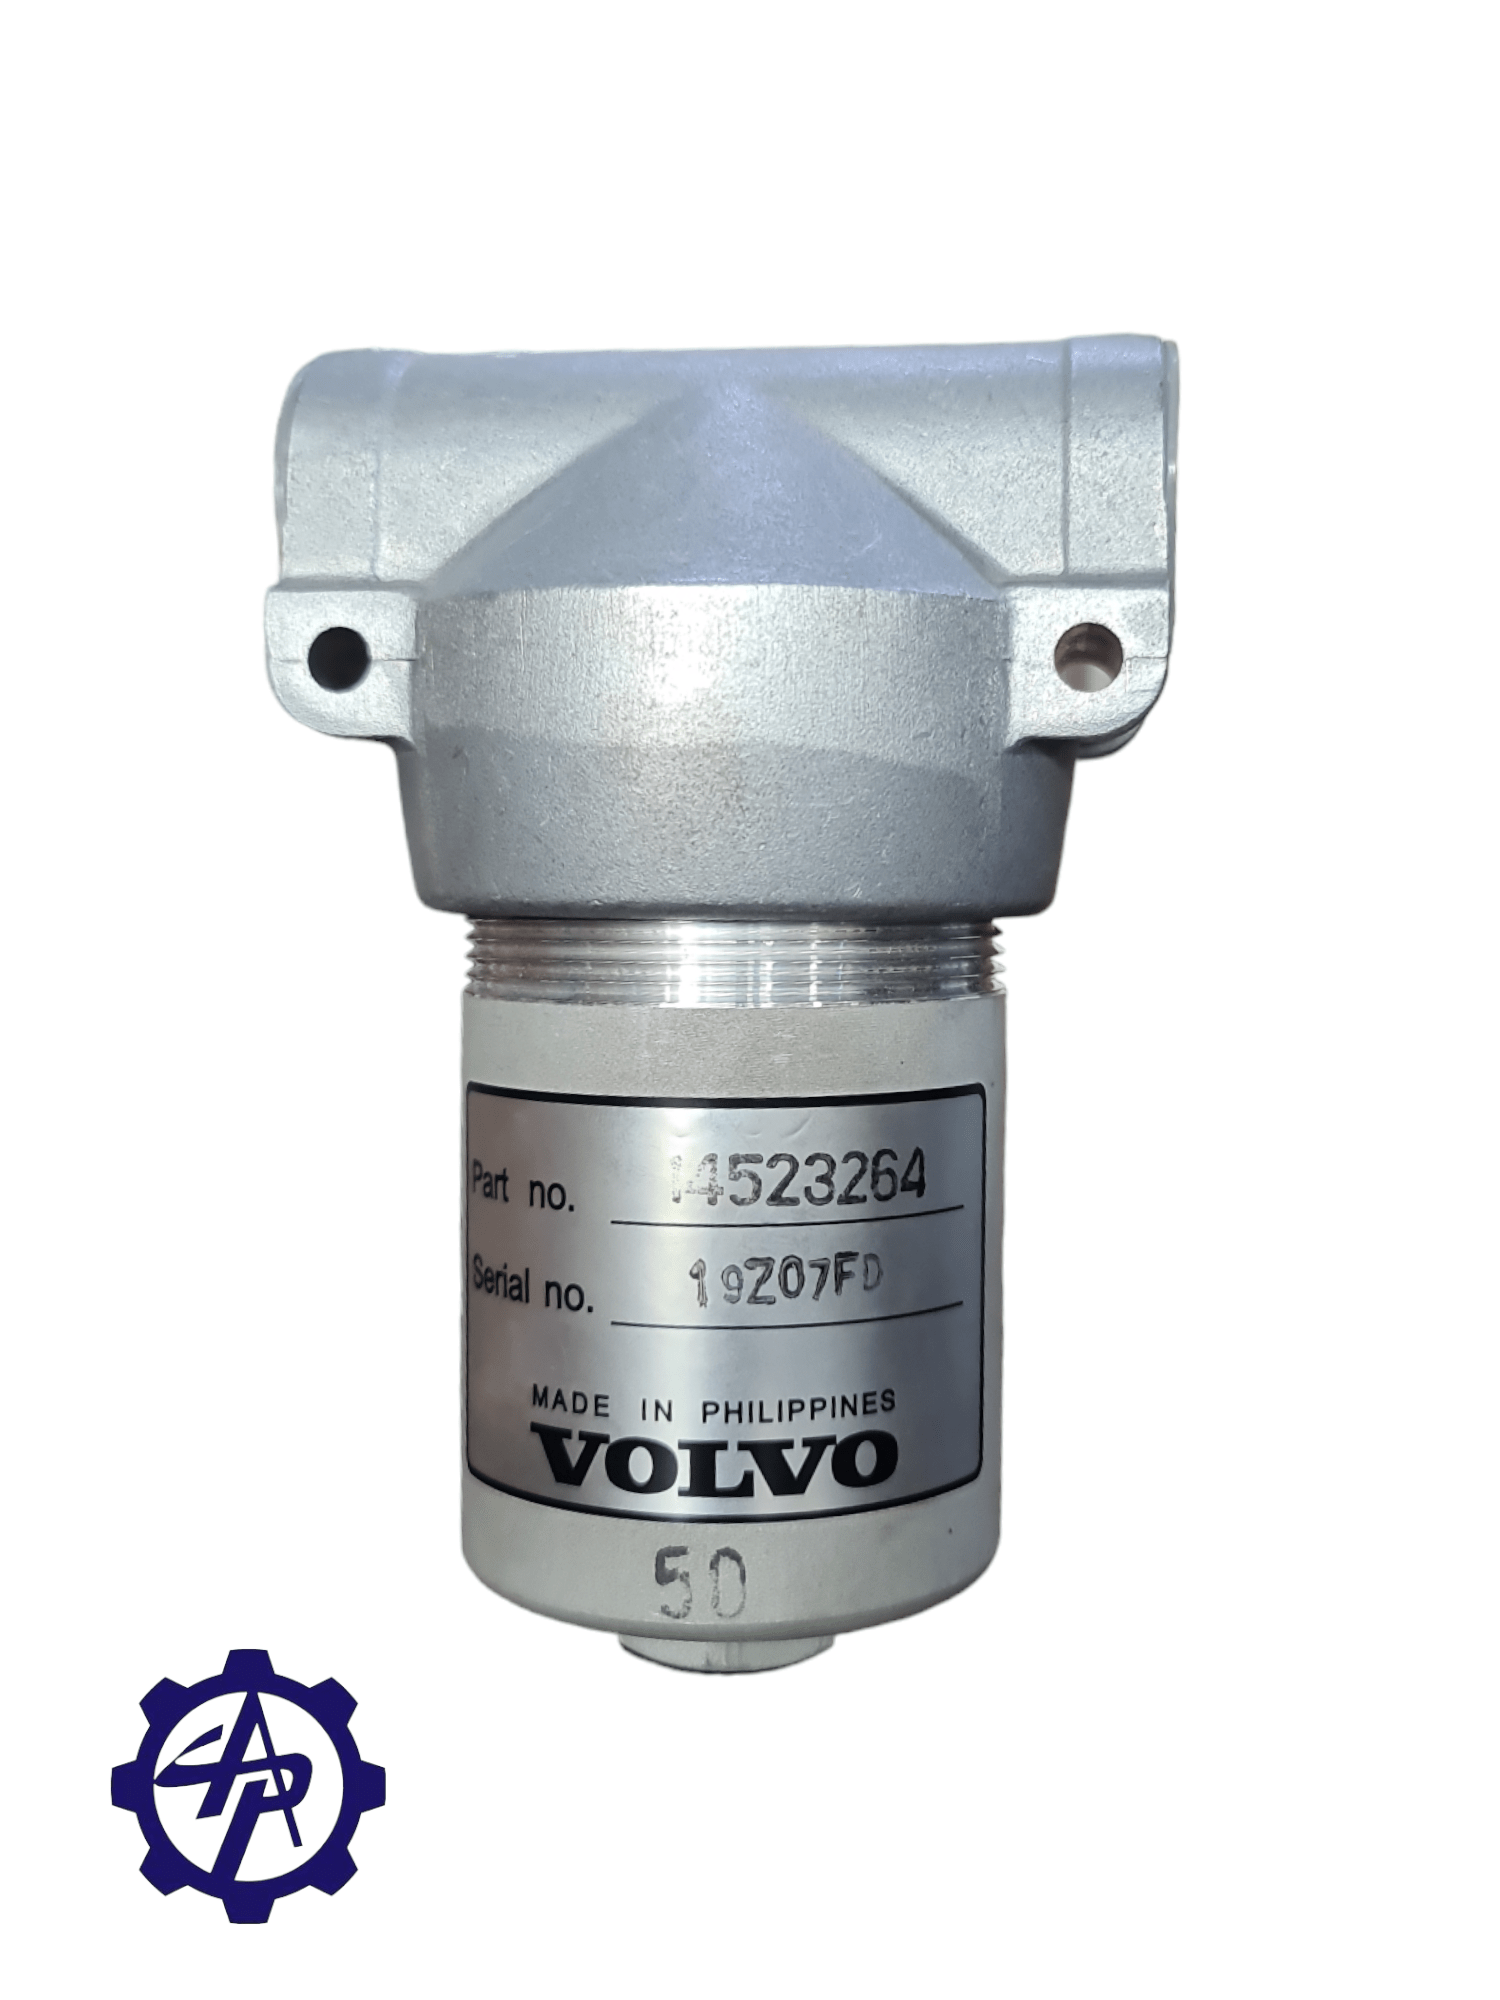 VOE 14523264 Hydraulic Filter Body Volvo